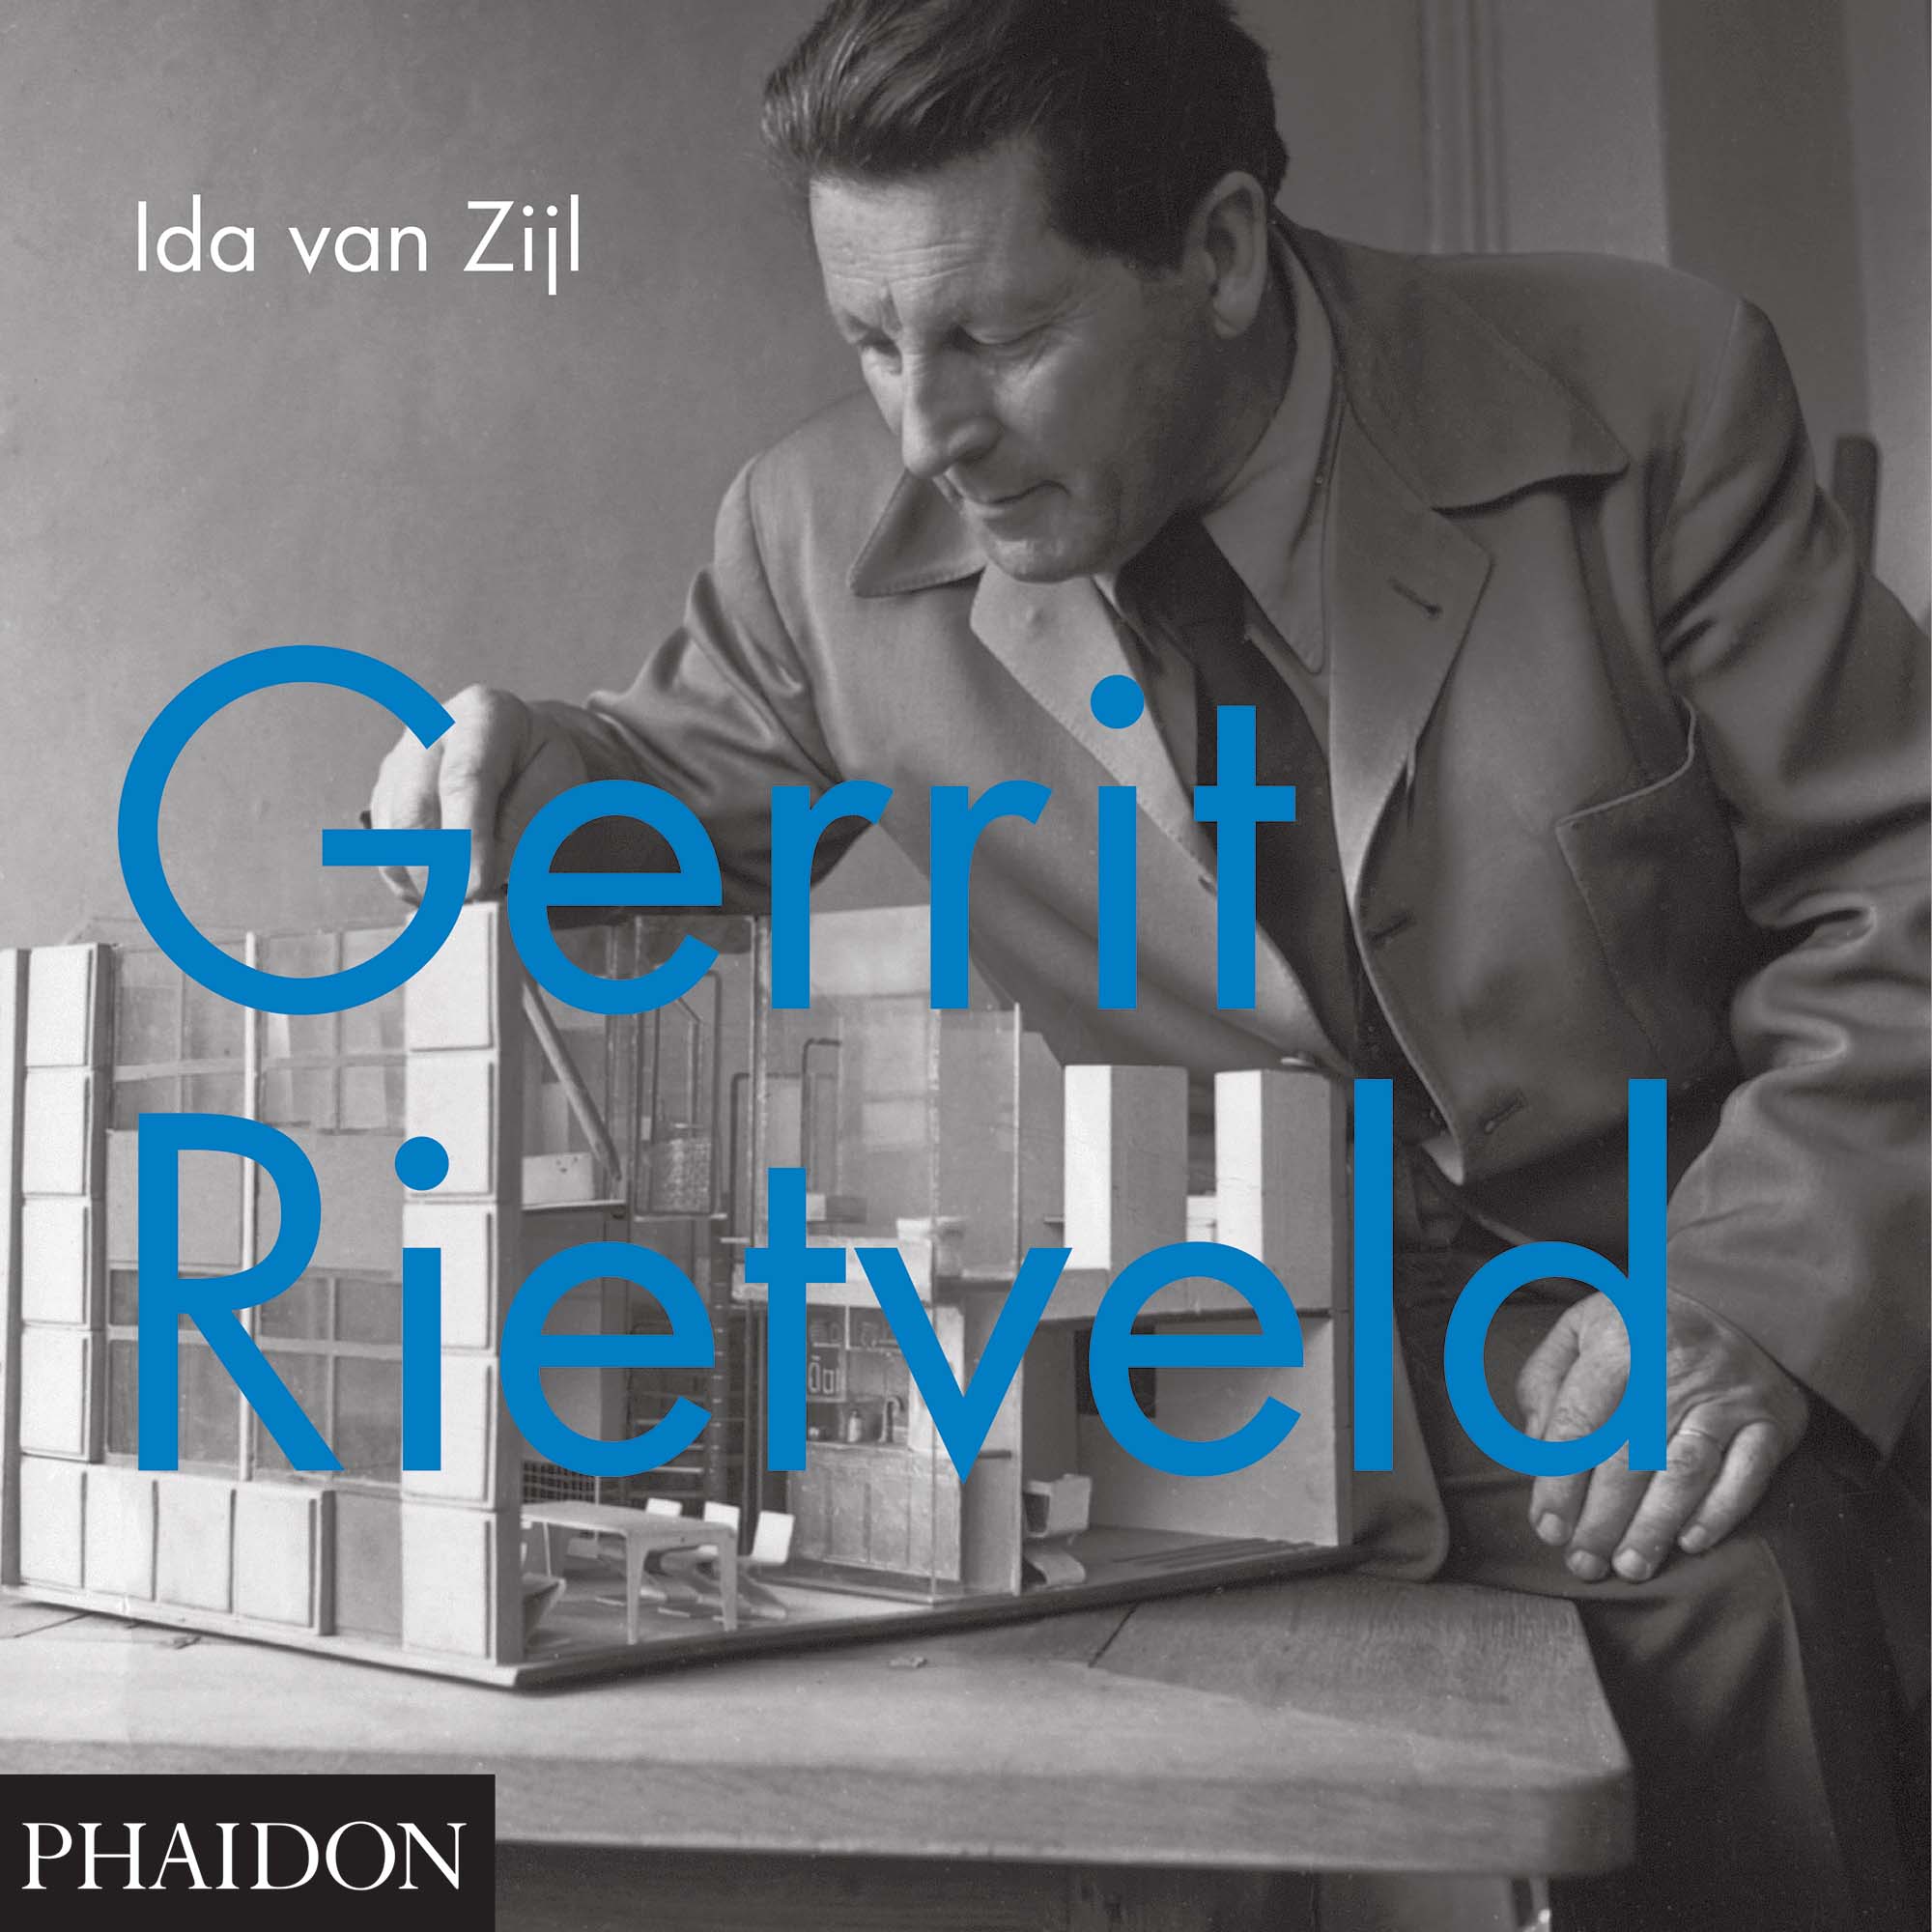 Gerrit Rietveld的图片
